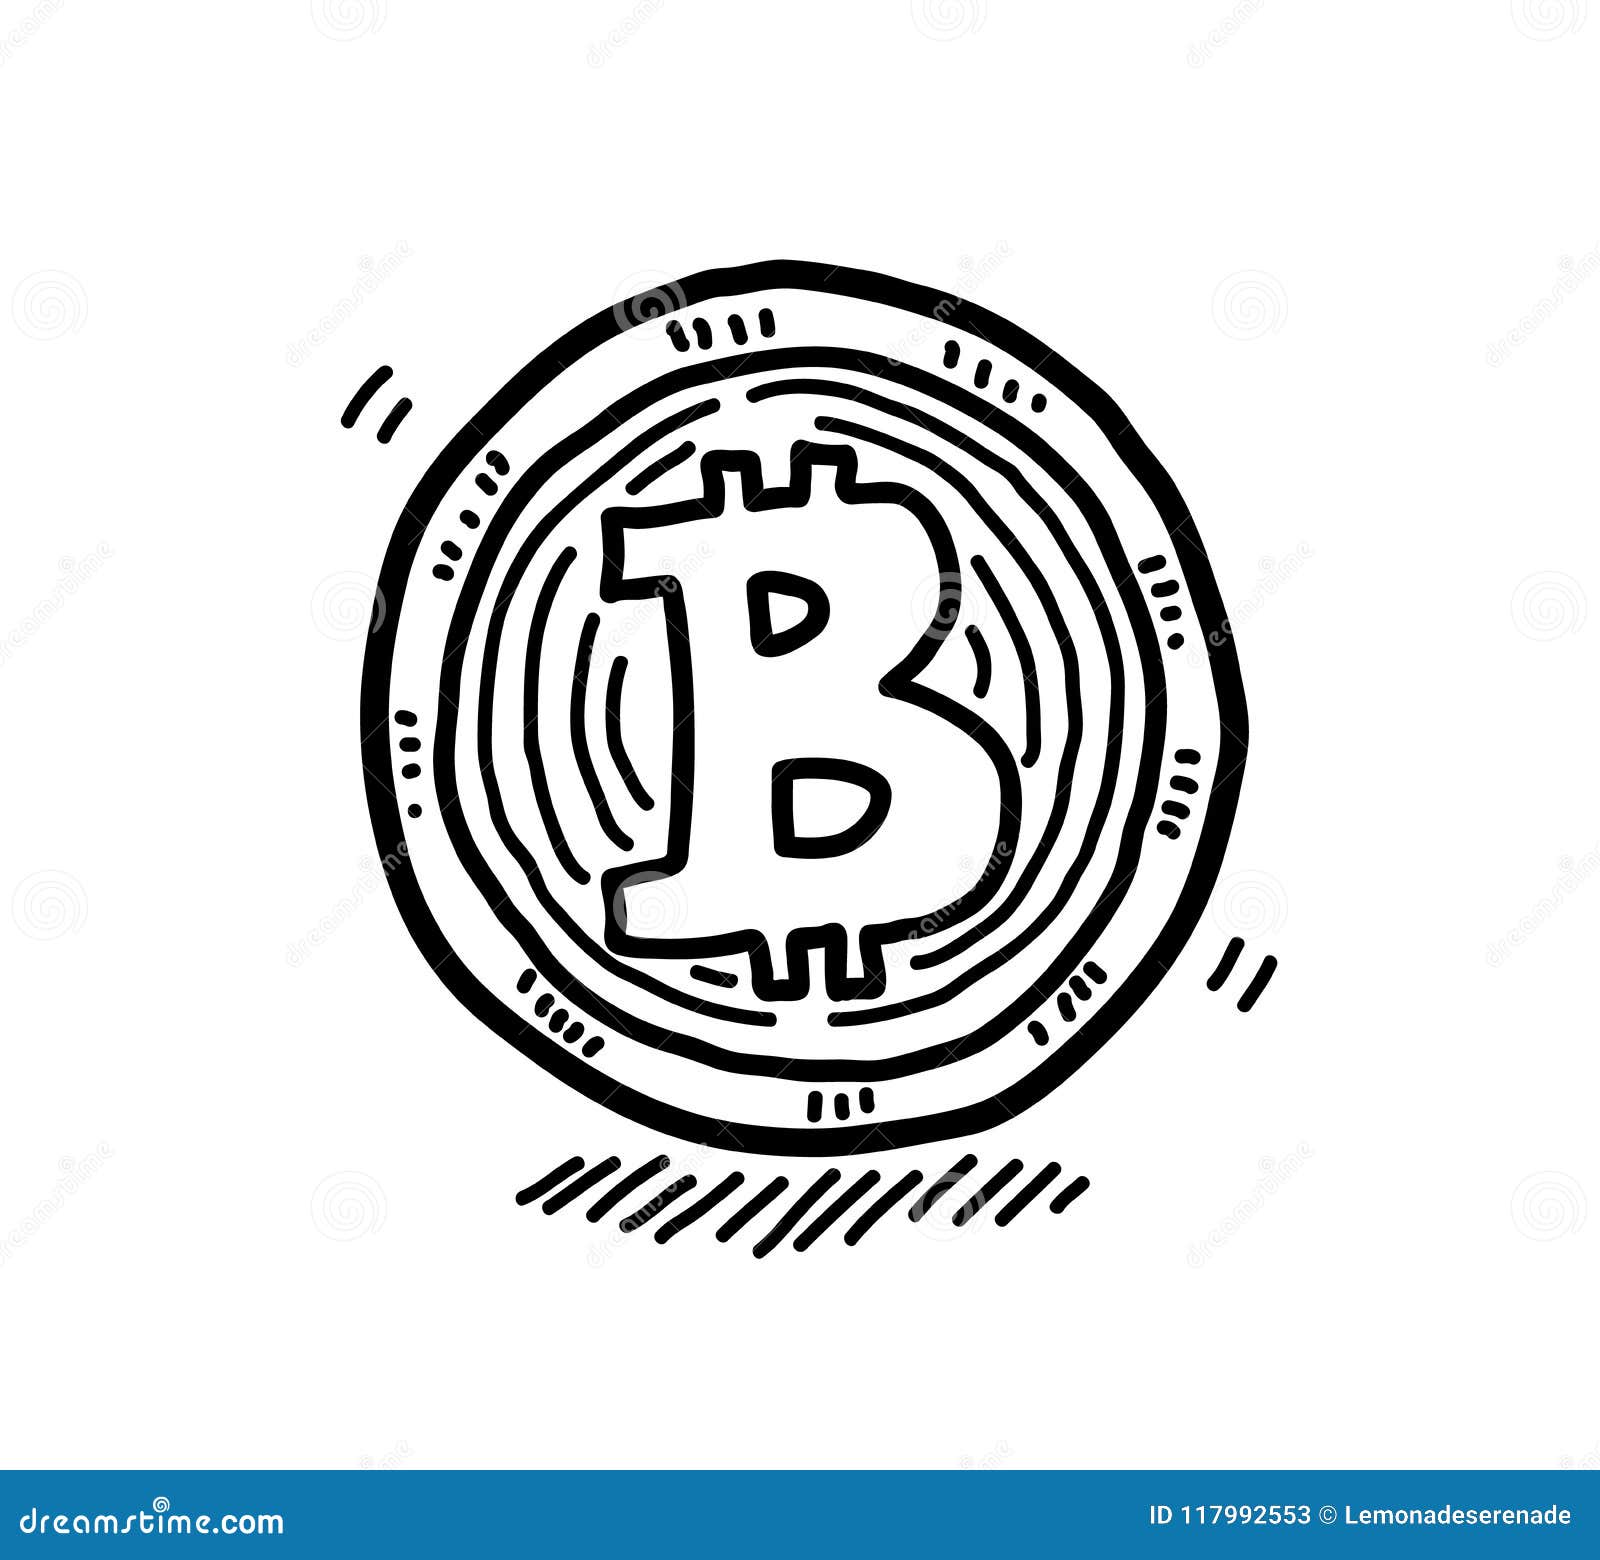 hand drawn bitcoin doodle, a hand drawn  doodle  of a bitcoin.